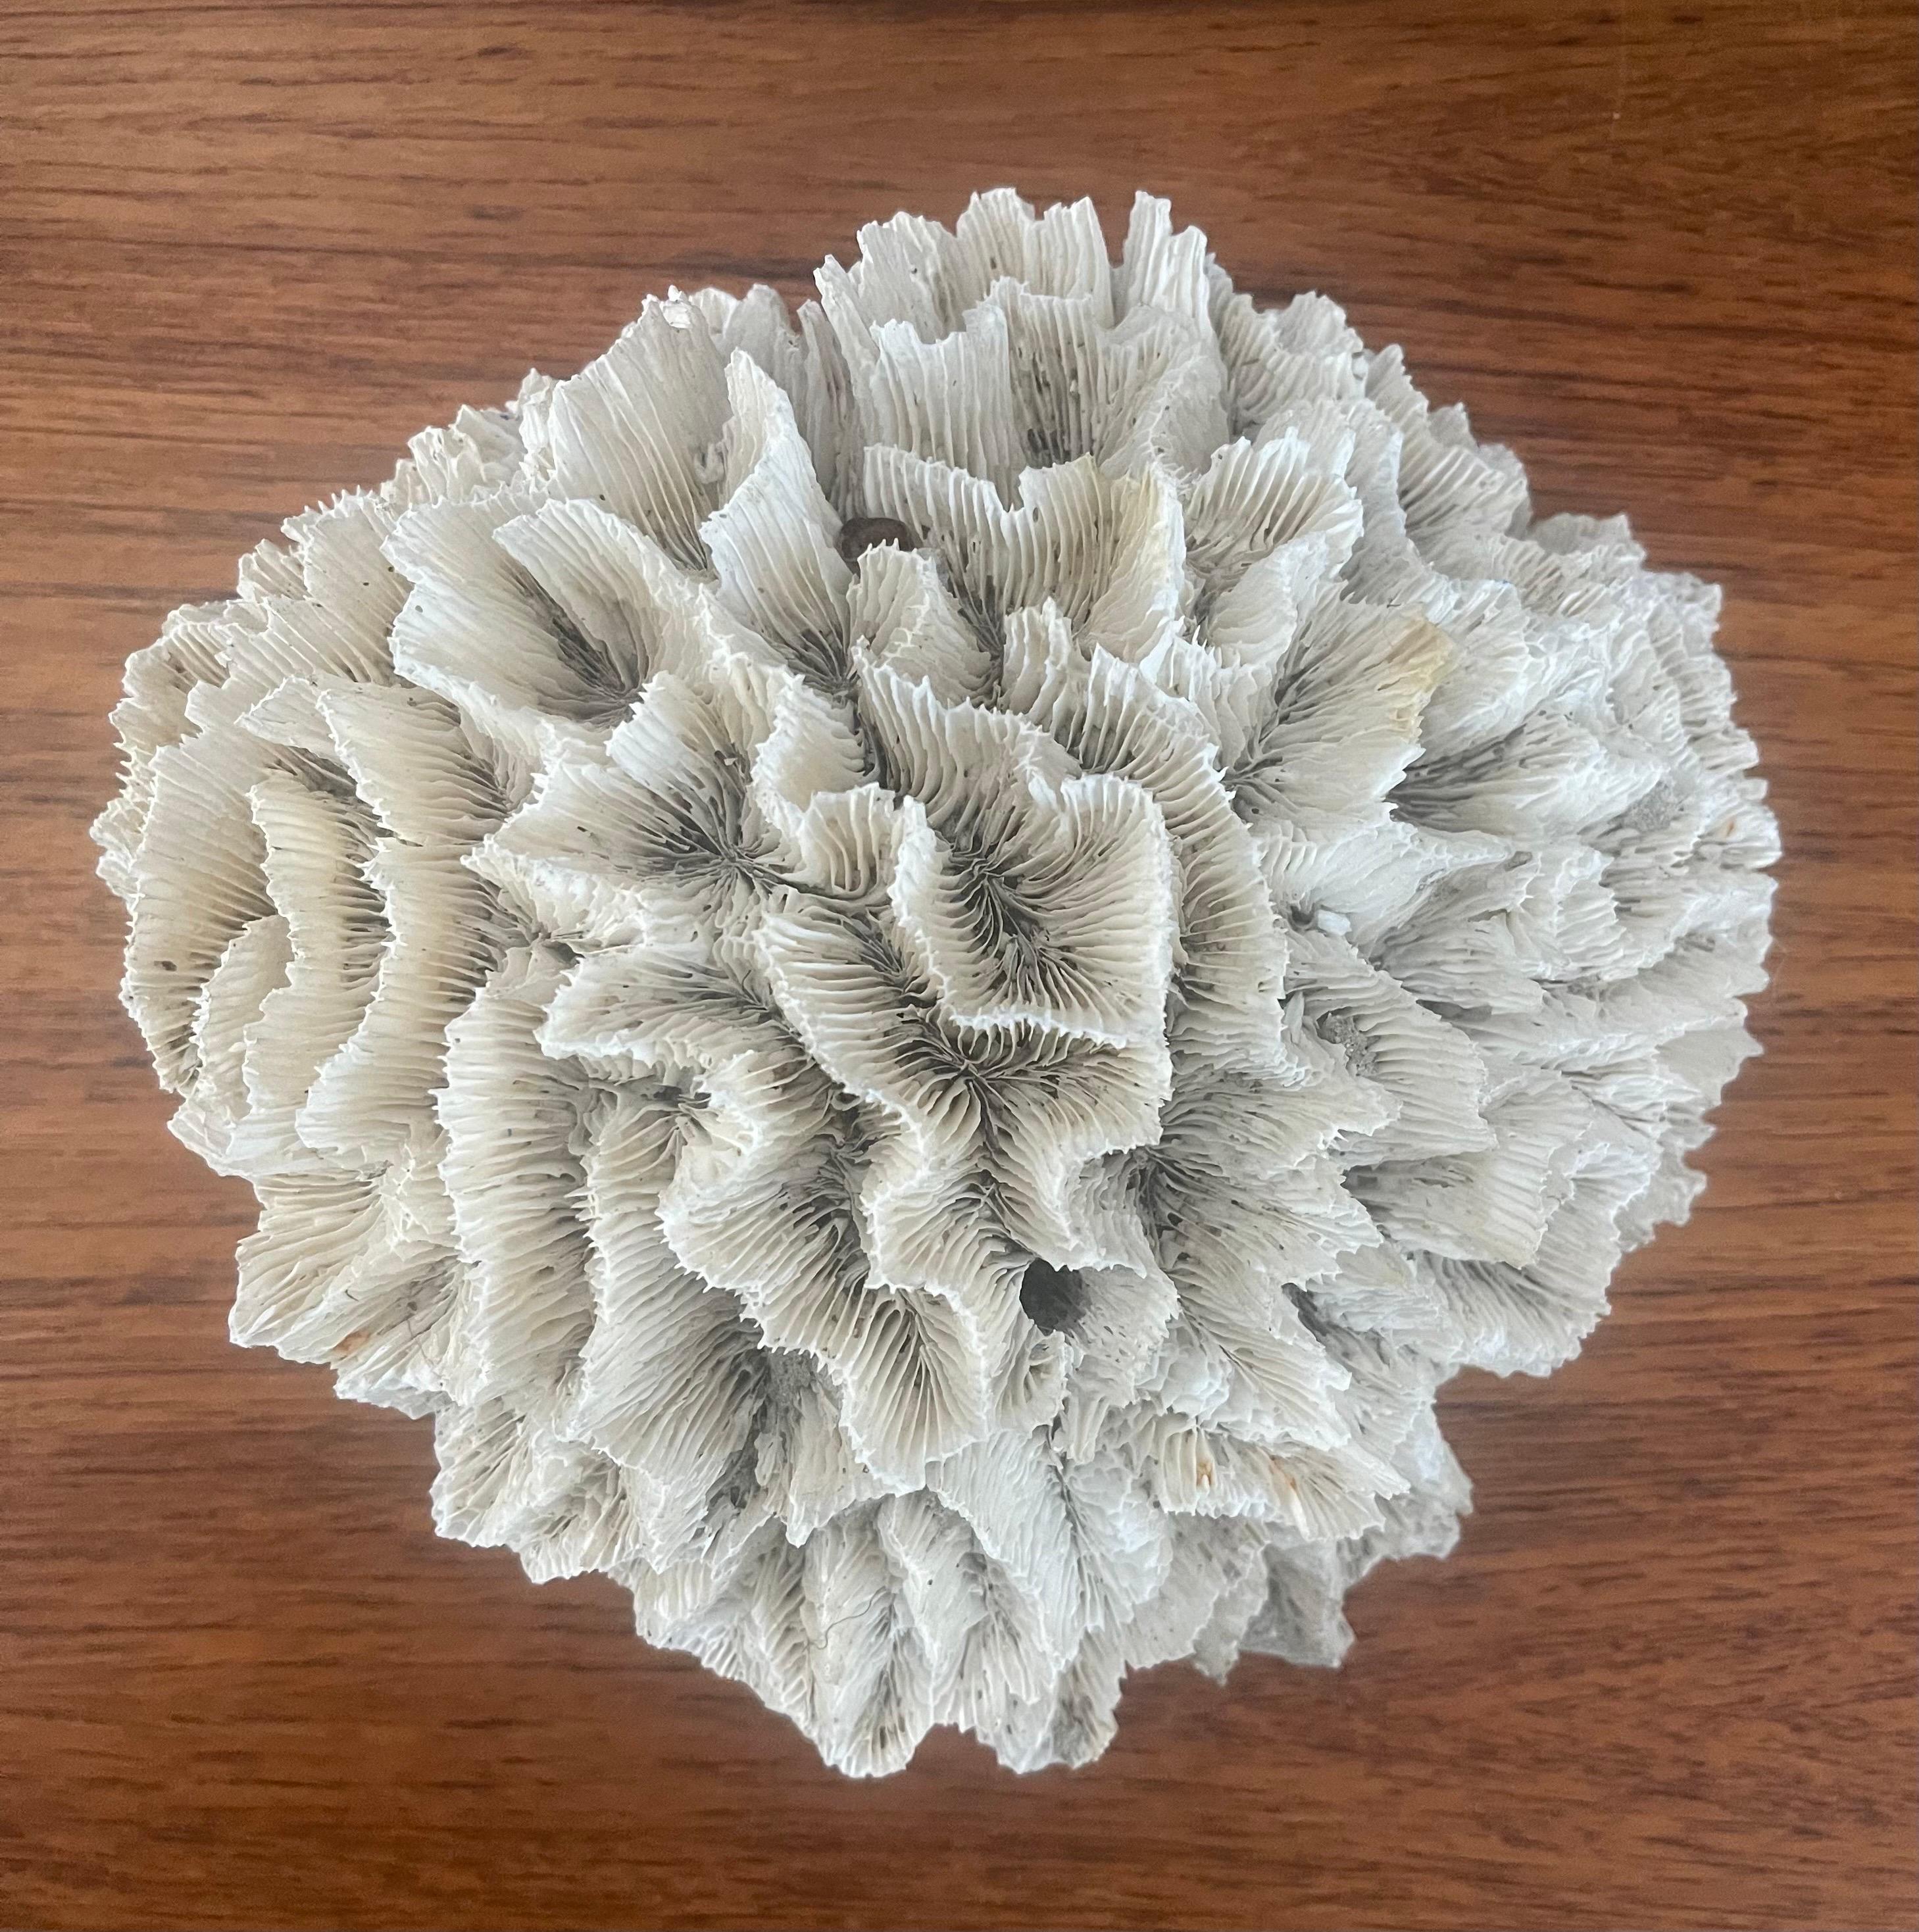 Large Natural White Sea Coral Specimen 4